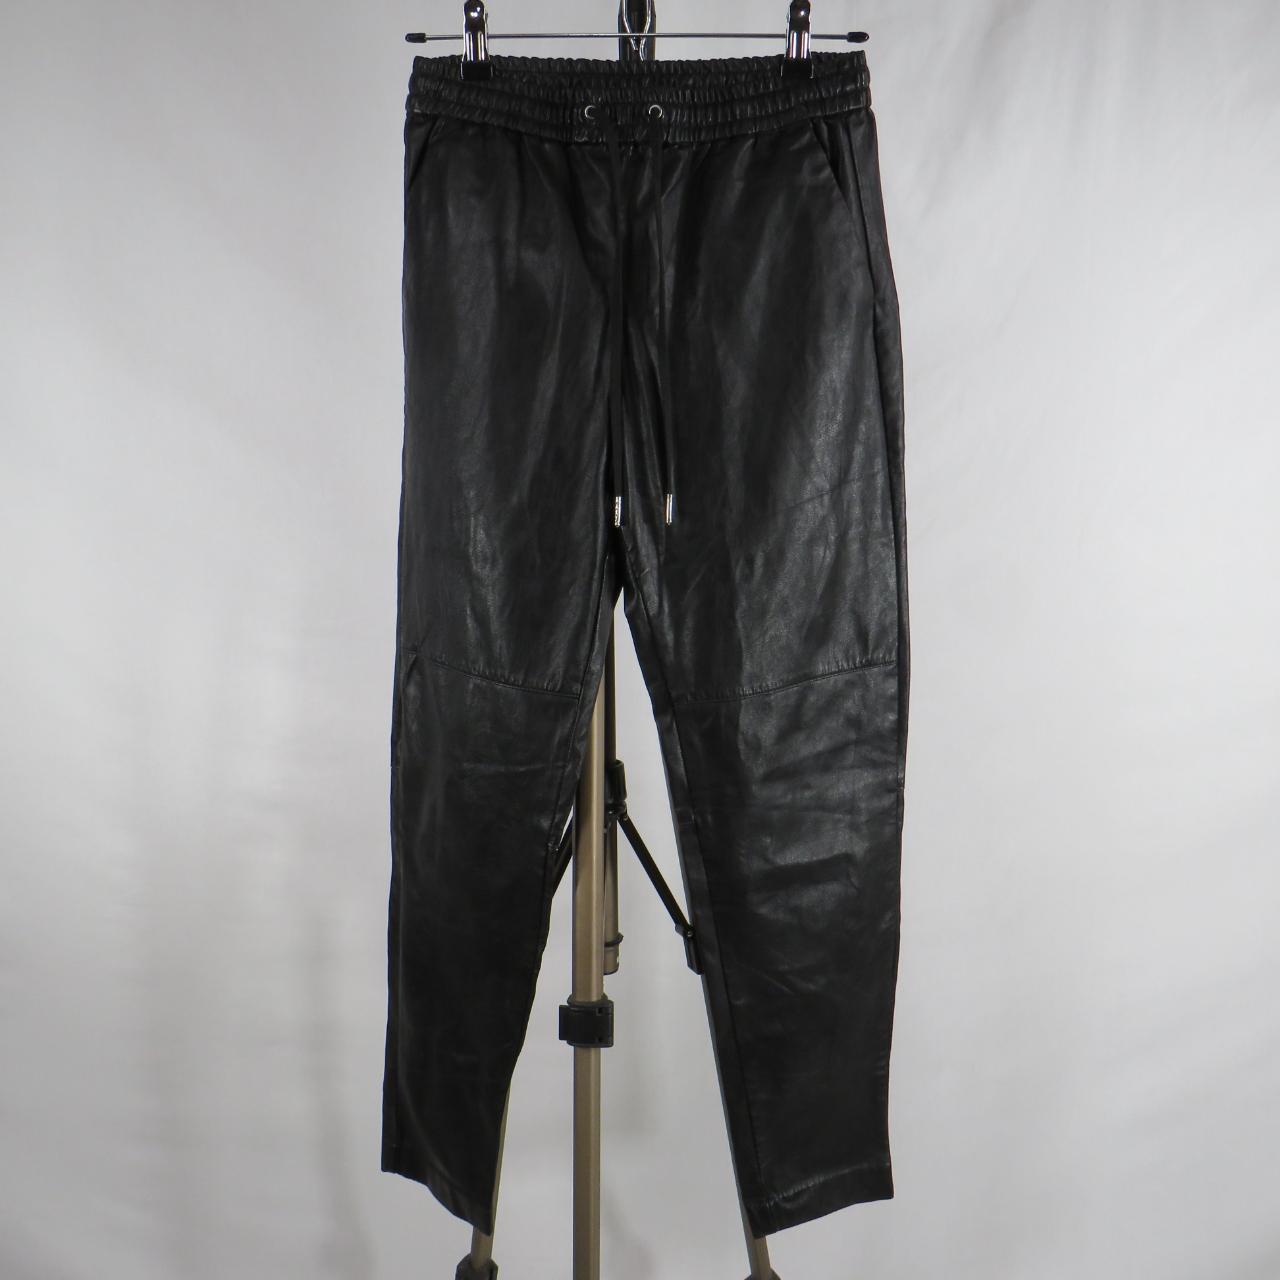 H&M leather pants with drawstring elastic waist, 2... - Depop